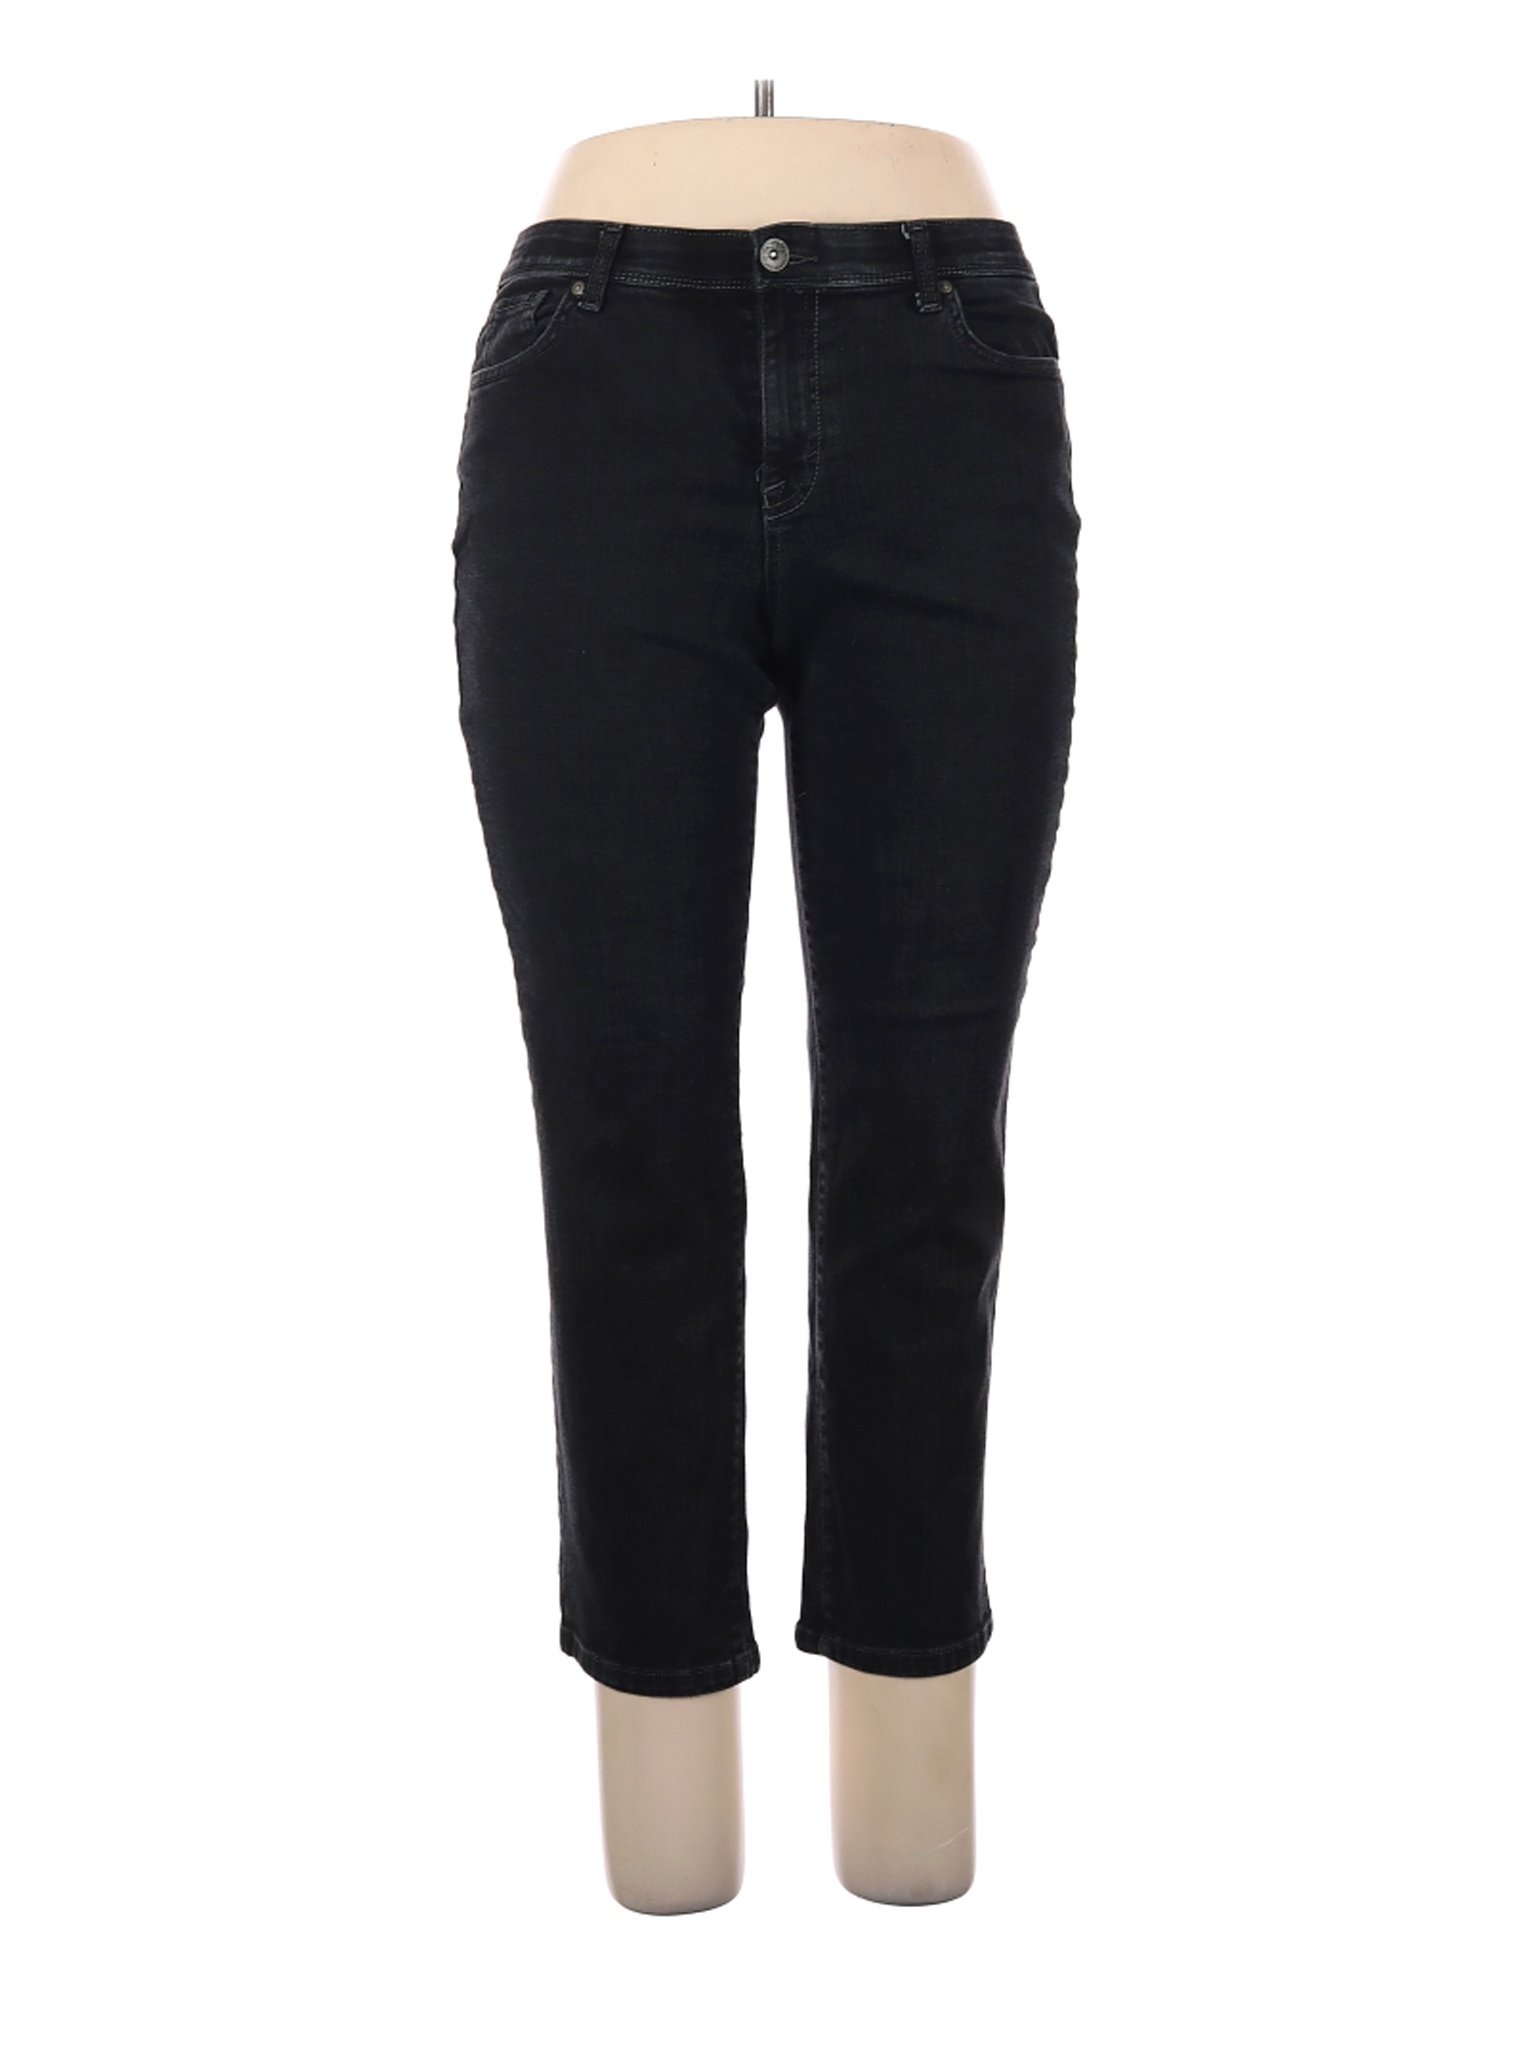 Style&Co Women Black Jeans 14 Petites | eBay